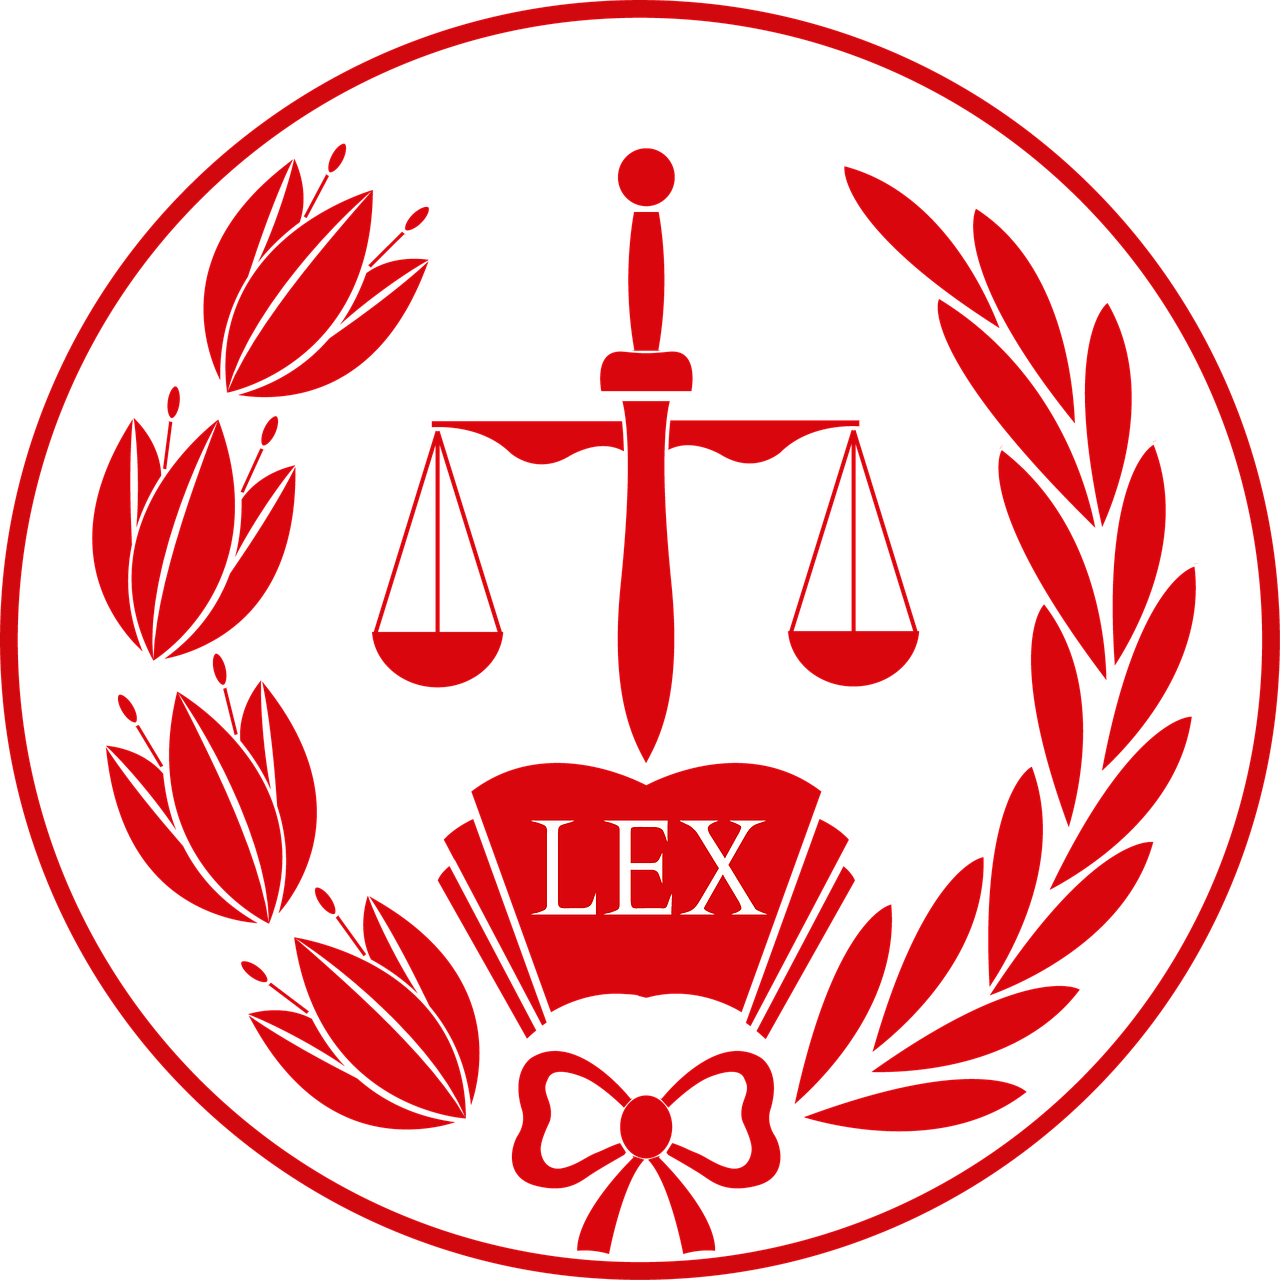 lawyers right emblem free photo